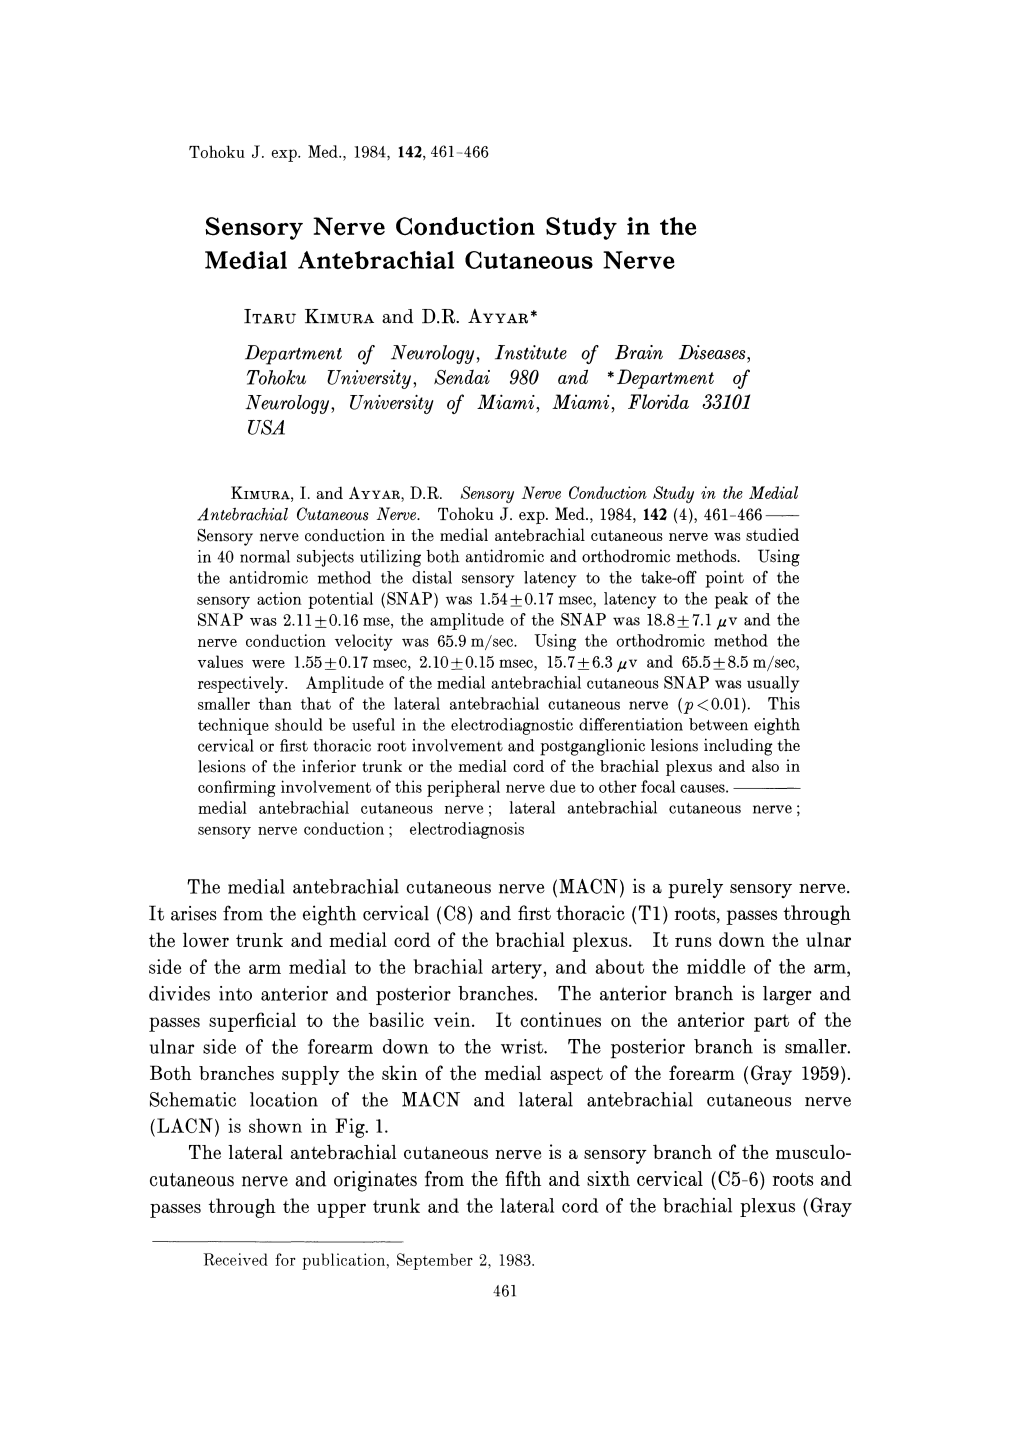 Sensory Nerve Conduction Study in the Medial Antebrachial Cutaneous Nerve